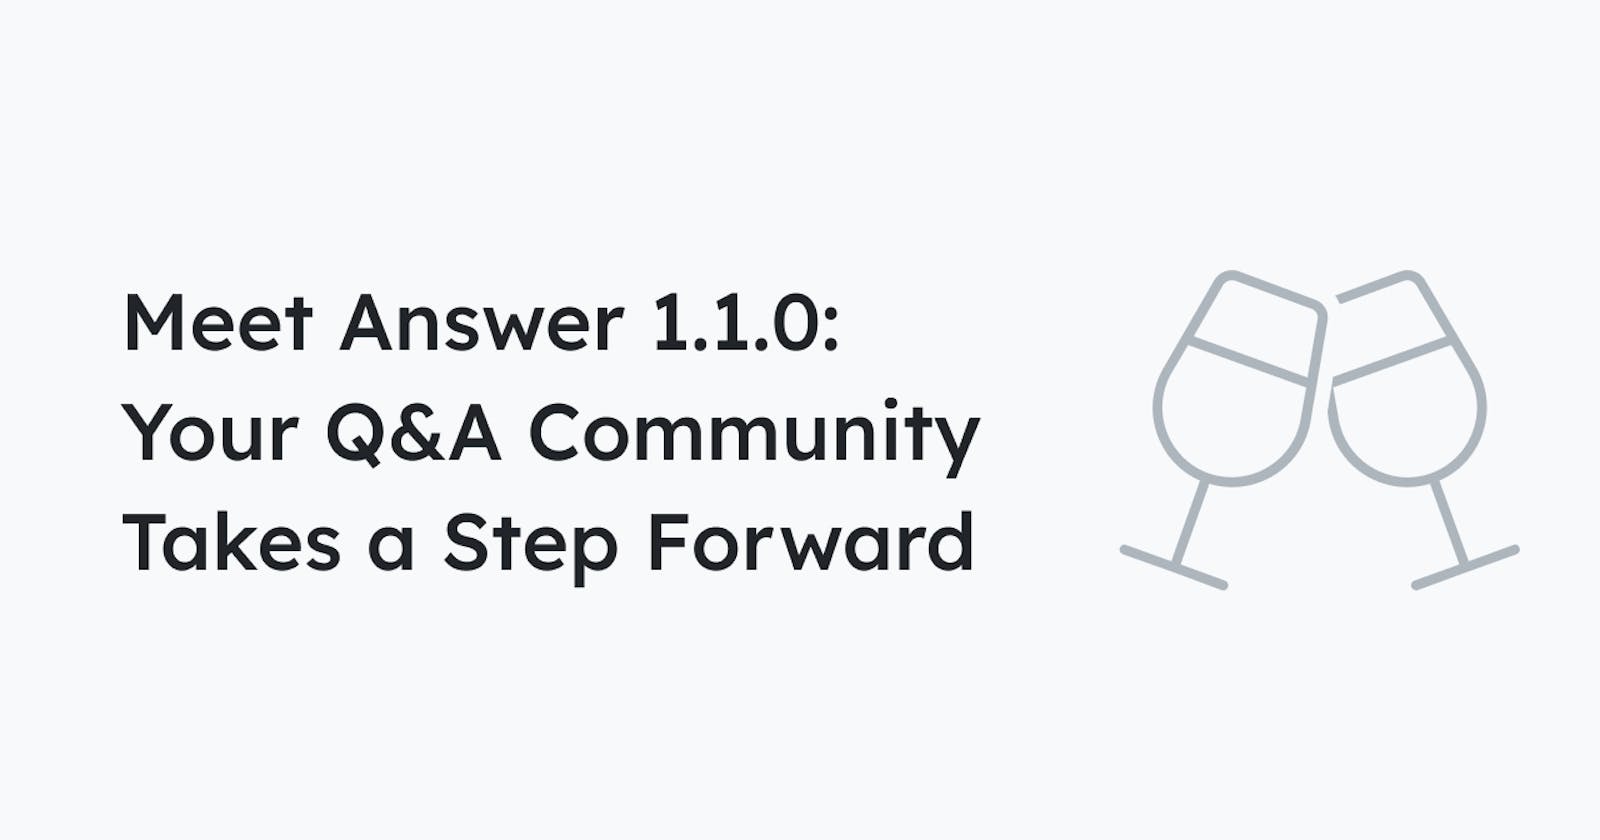 Meet Answer 1.1.0: Your Q&A Community Takes a Step Forward